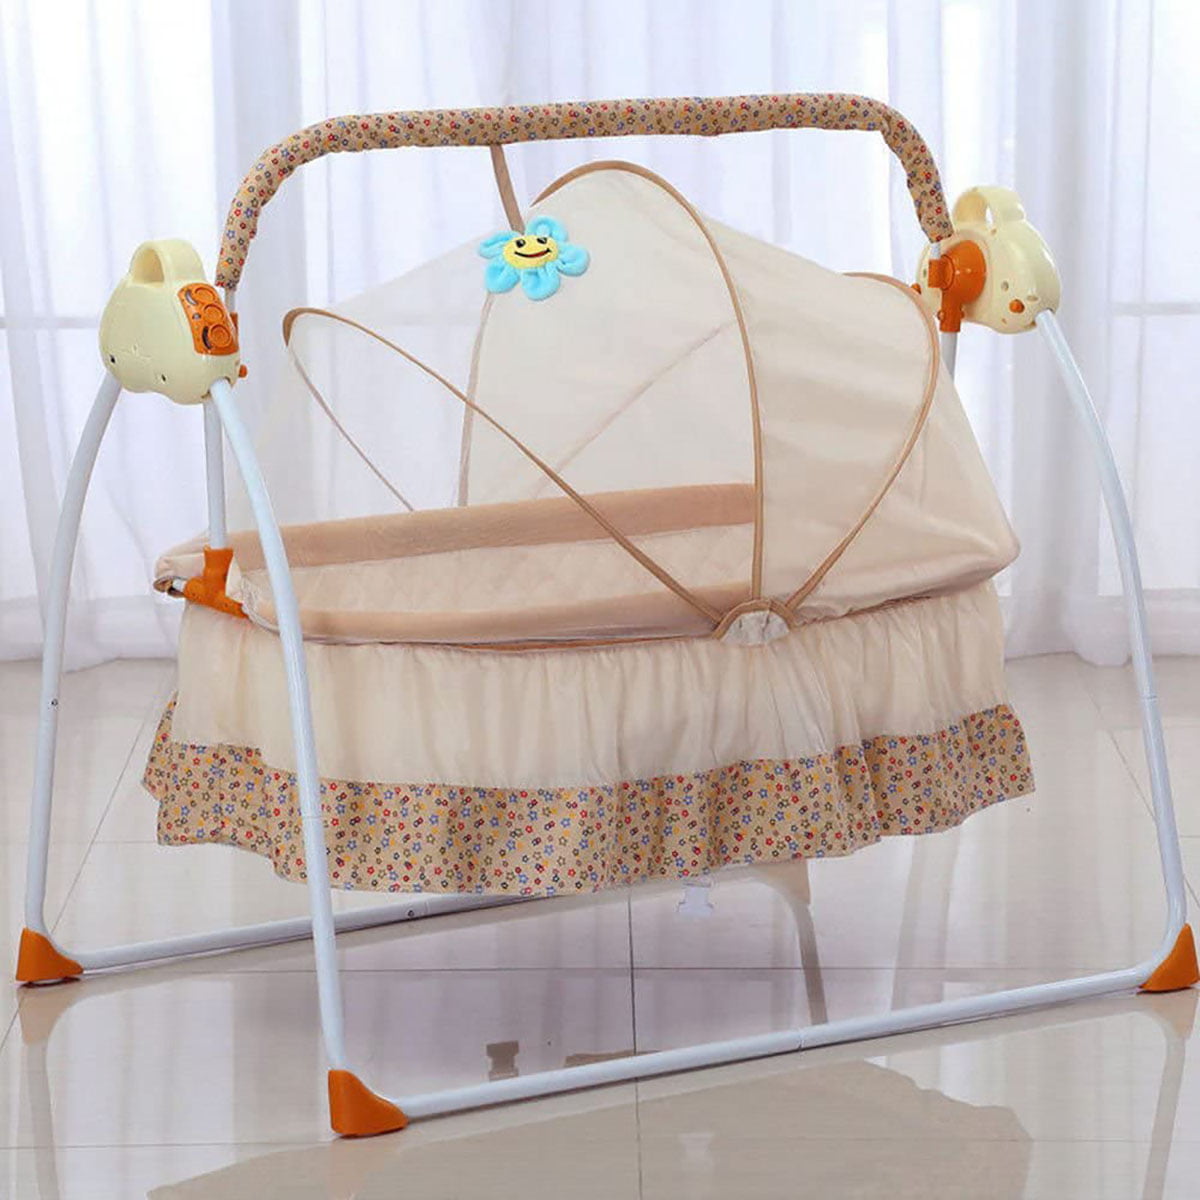 Baby Auto-Swing Bed Bluetooth Electric USB Crib Cradle Infant Rocker Cradle+Mat 